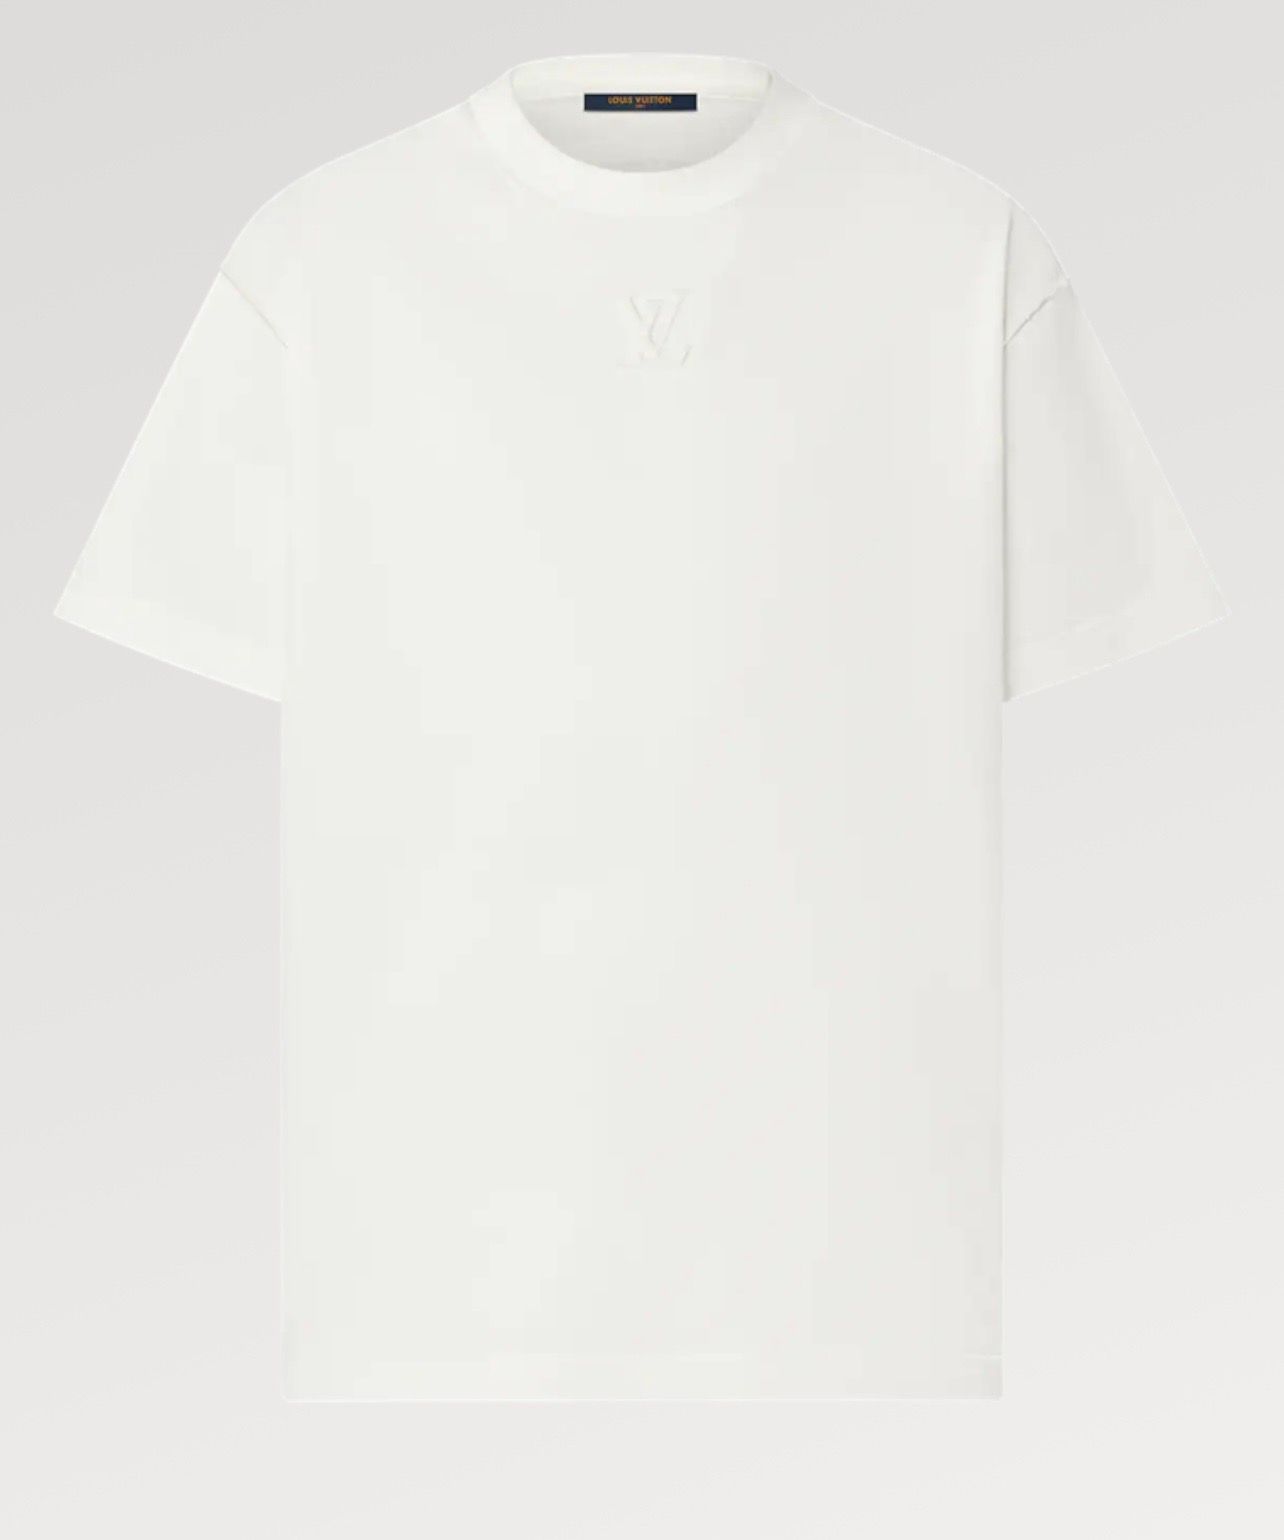 Louis Vuitton Louis Vuitton “LV” embossed T-shirt